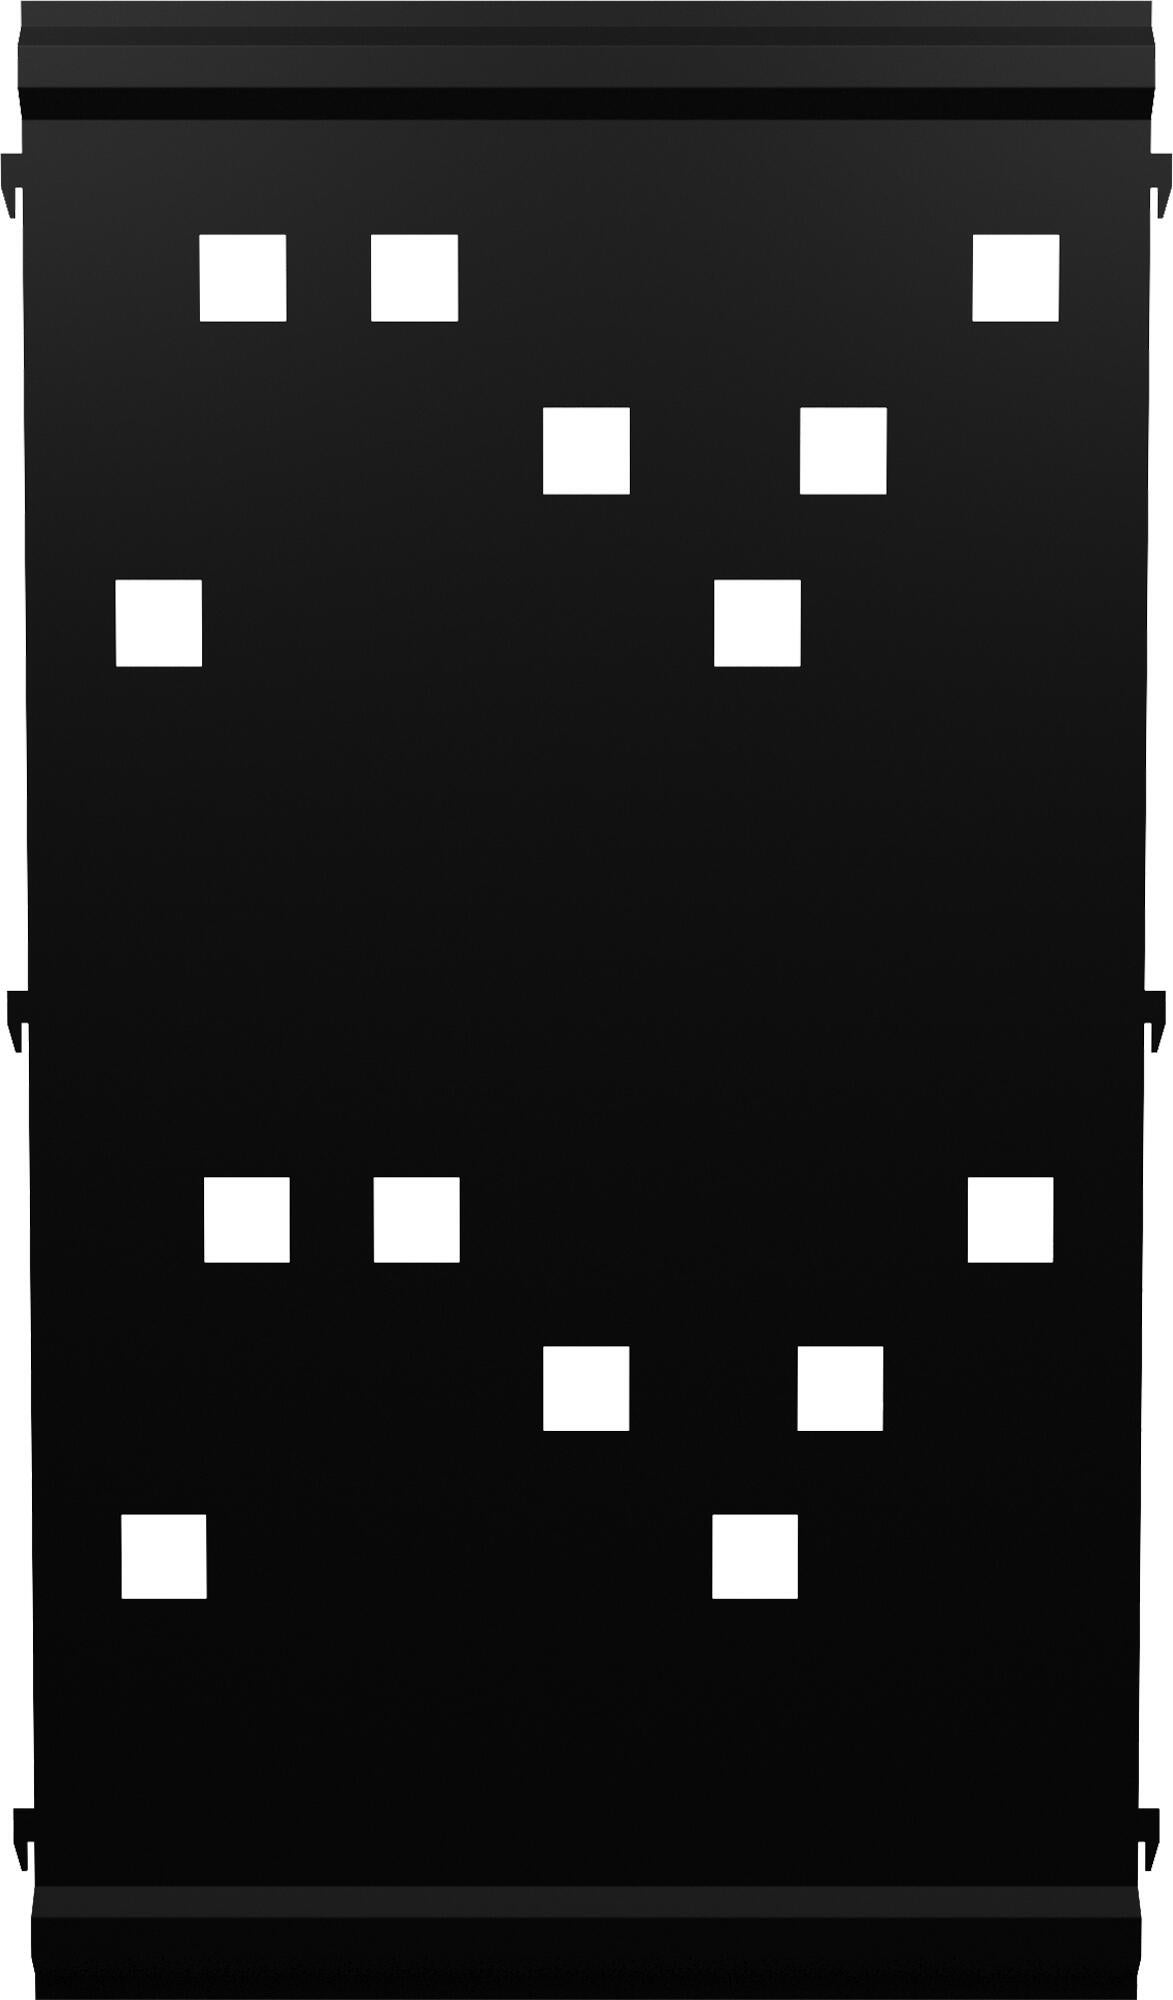 Panel remate valla acero galvanizado franja cuadros negro 94x52,5 cm